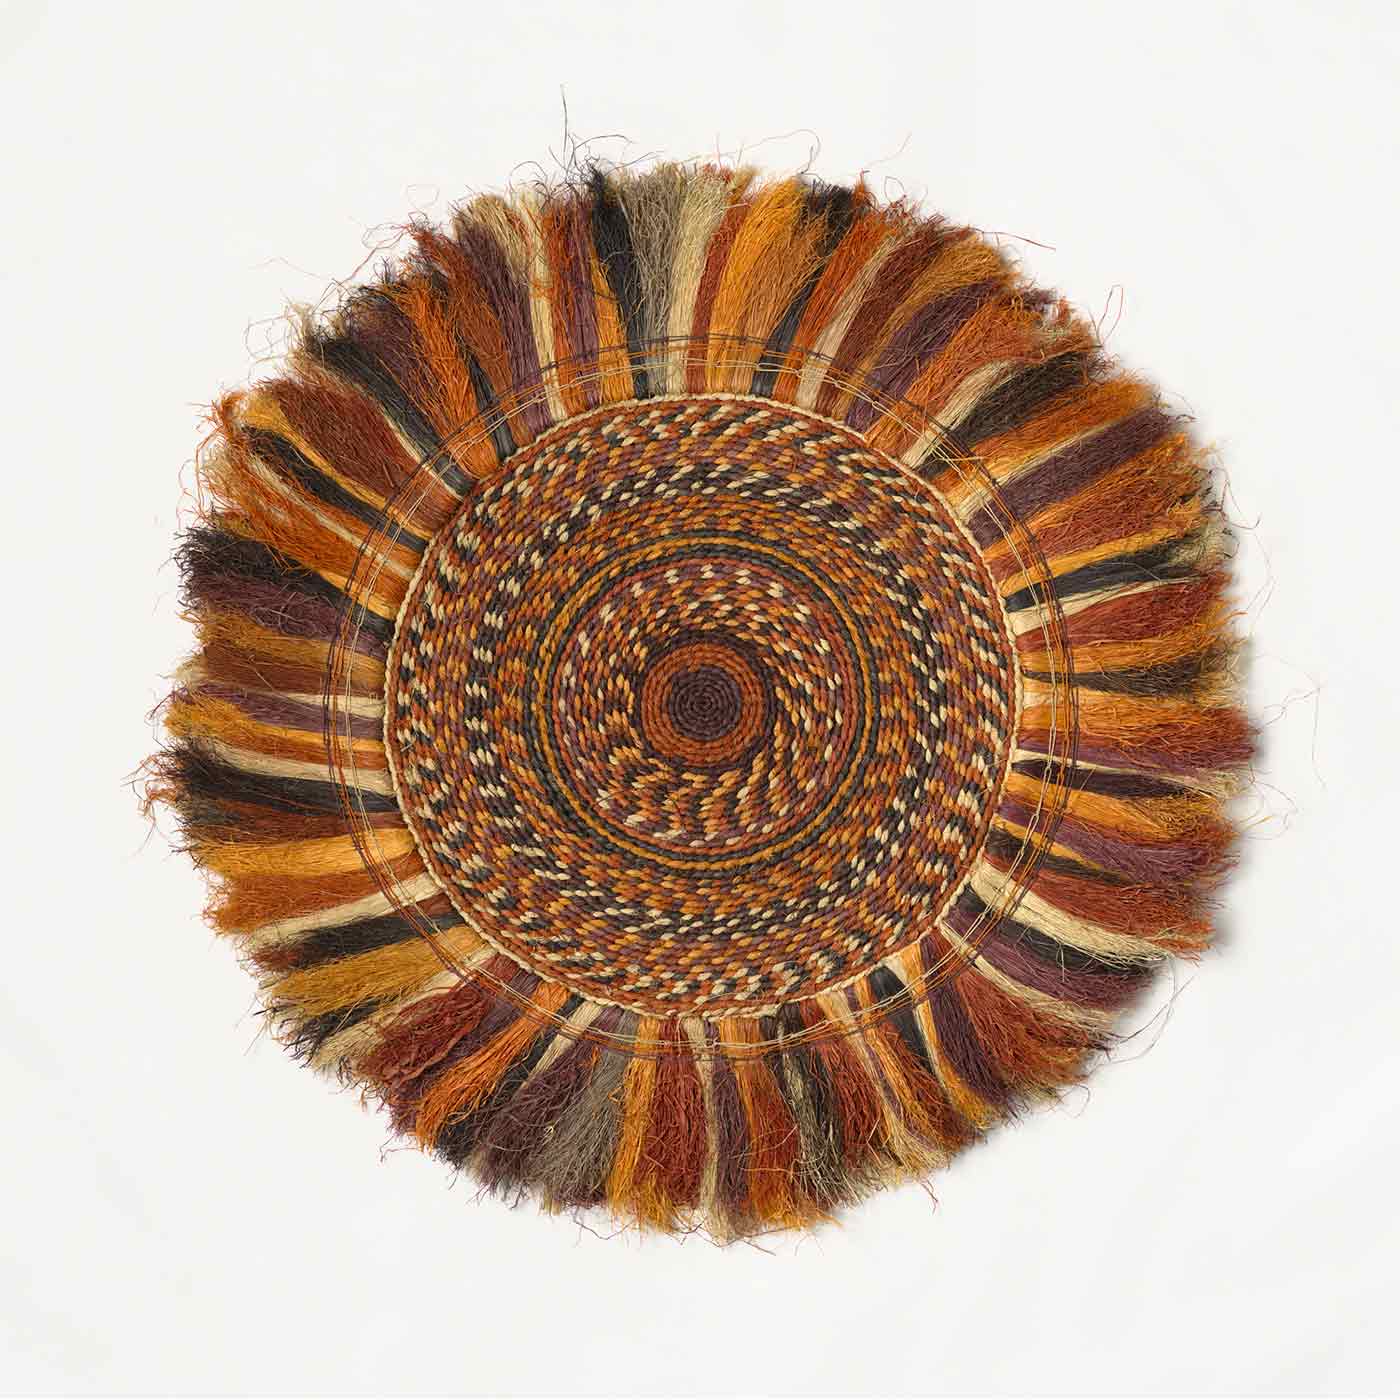 A circular weaving resembling the sun - click to view larger image